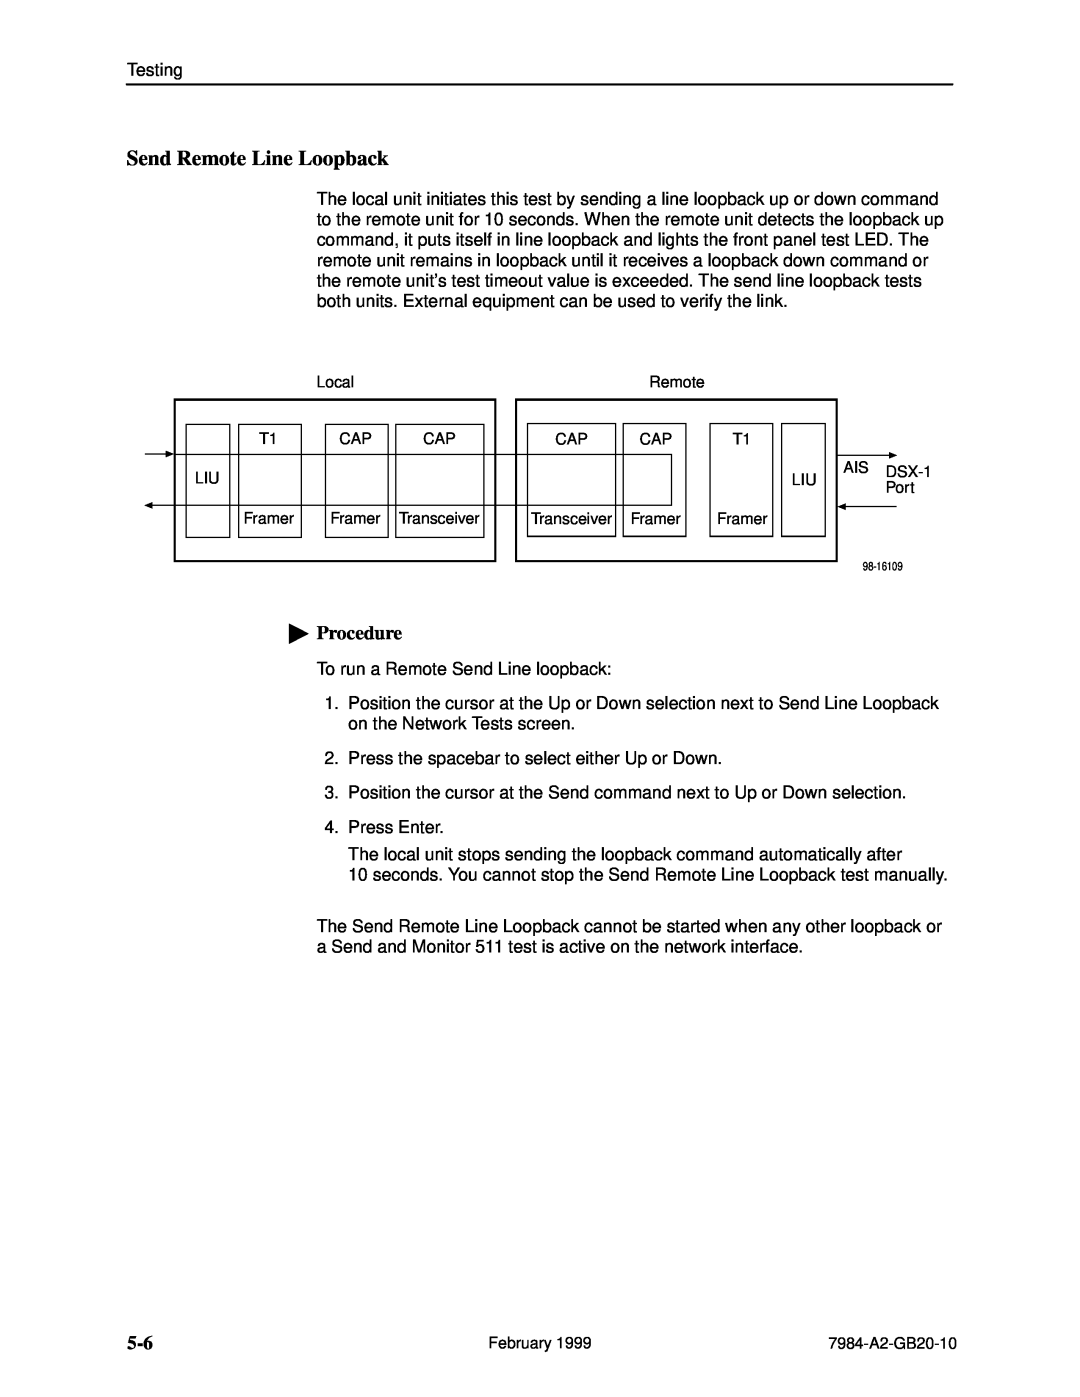 Paradyne Hotwire 7984 manual Send Remote Line Loopback, Procedure 